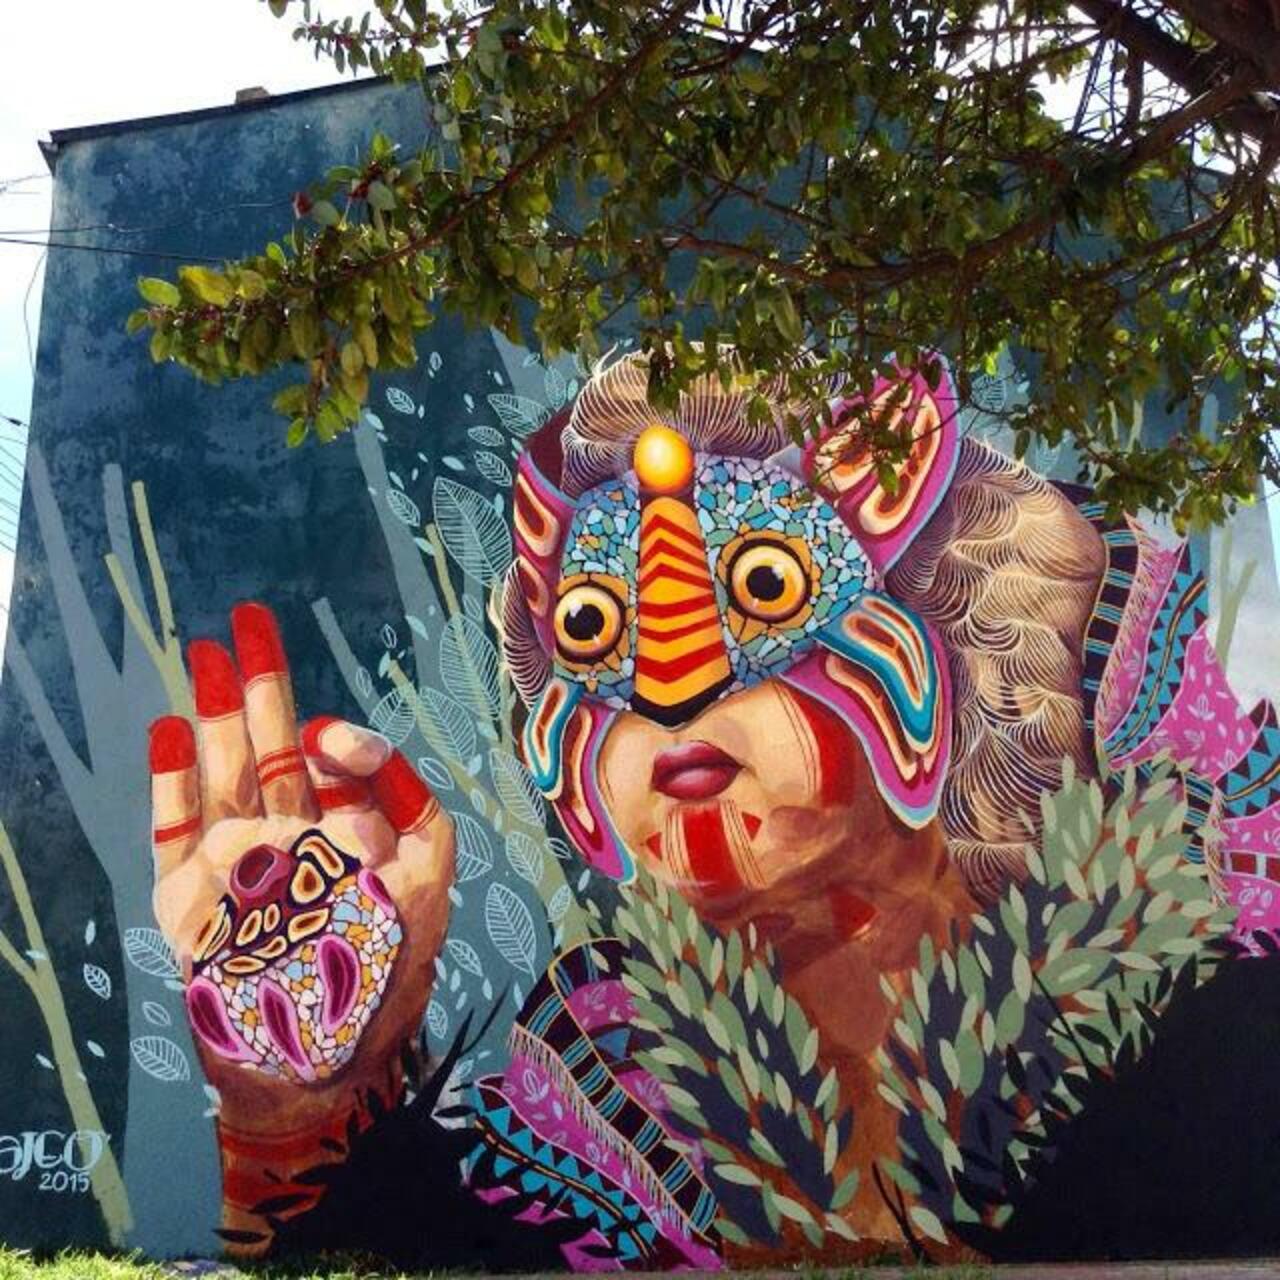 #Gleo unveils "A Contramano", a new mural in #Bogota, Colombia #streetart #urbanart #graffiti http://fan.cx/jWz http://t.co/JcgqbFOXWM